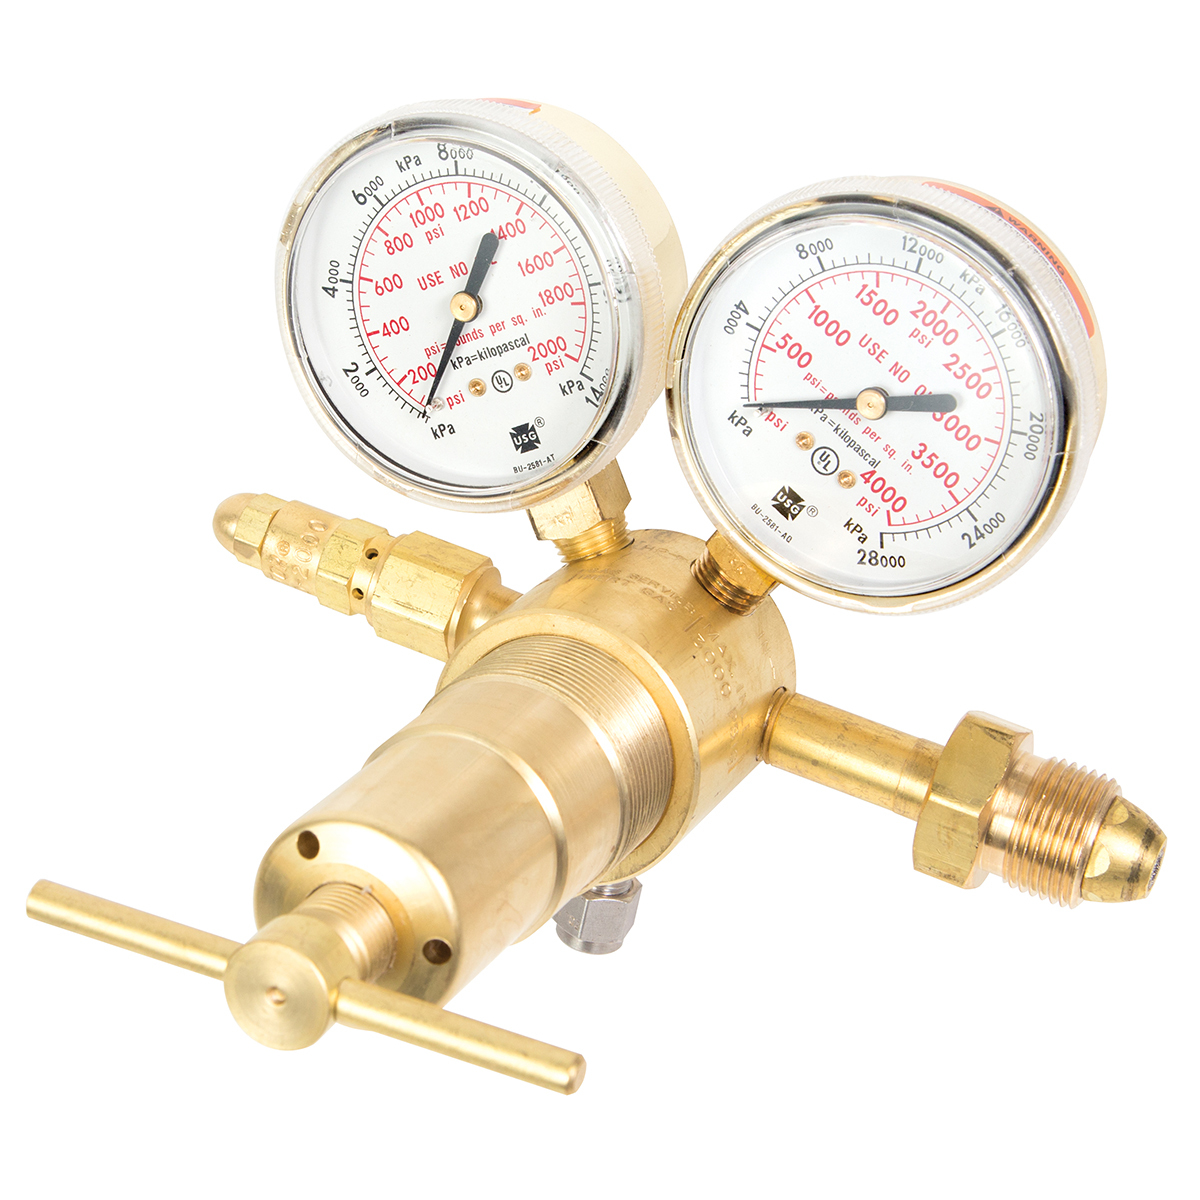 Victor Equipment 1694 Gas Regulator W/ Gauge 350 PSI Max Inlet Pressure for sale online 2 